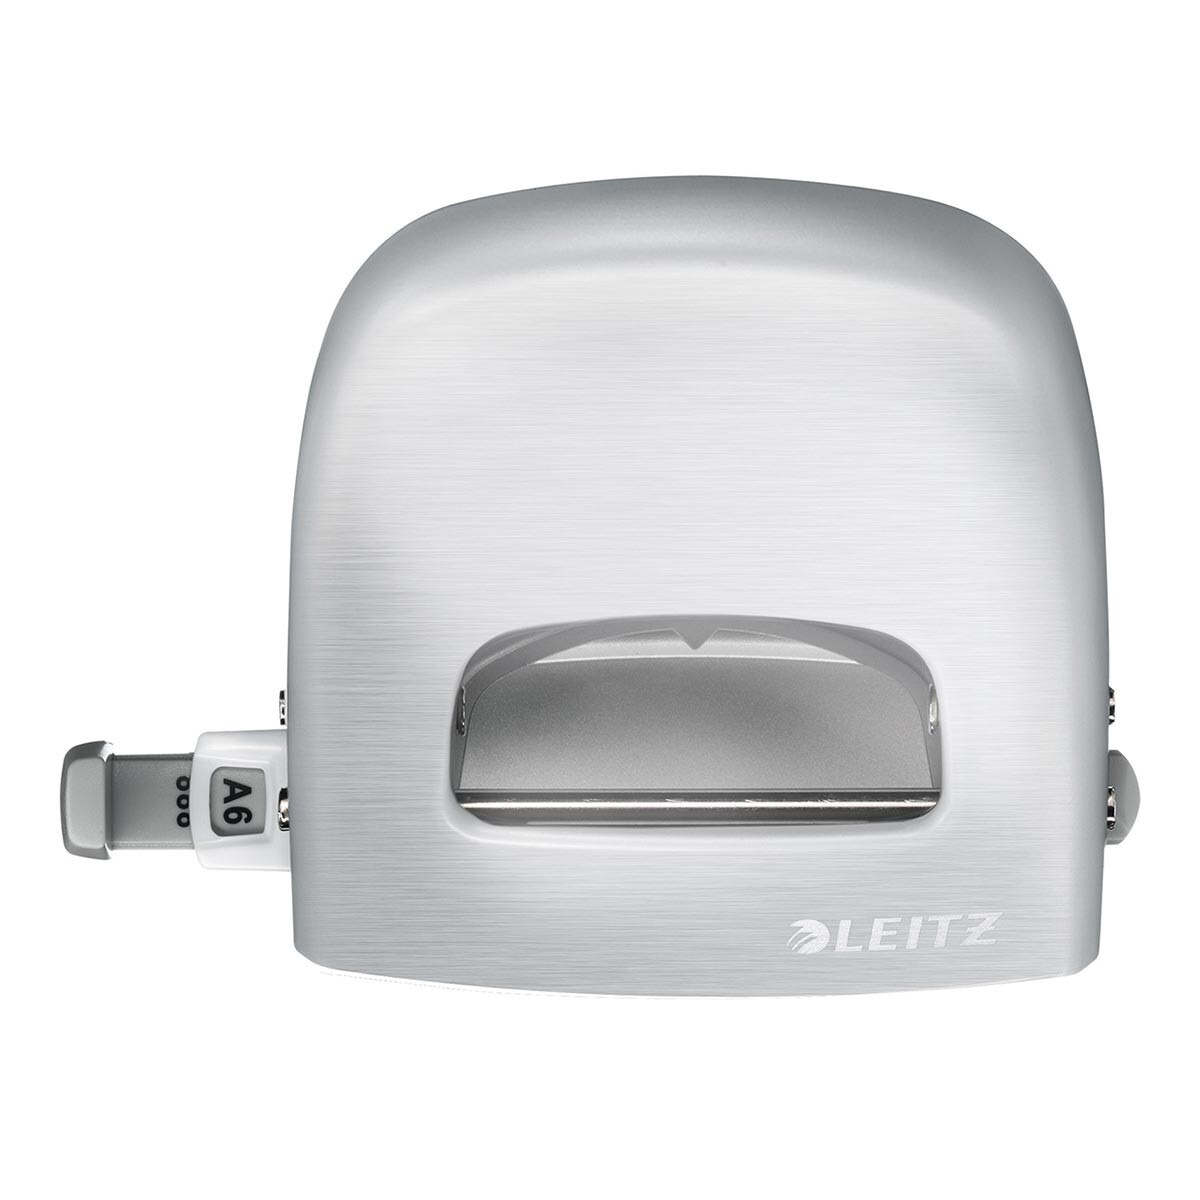 Leitz Style系列桌上型打孔機 LZ5006-00 北極白